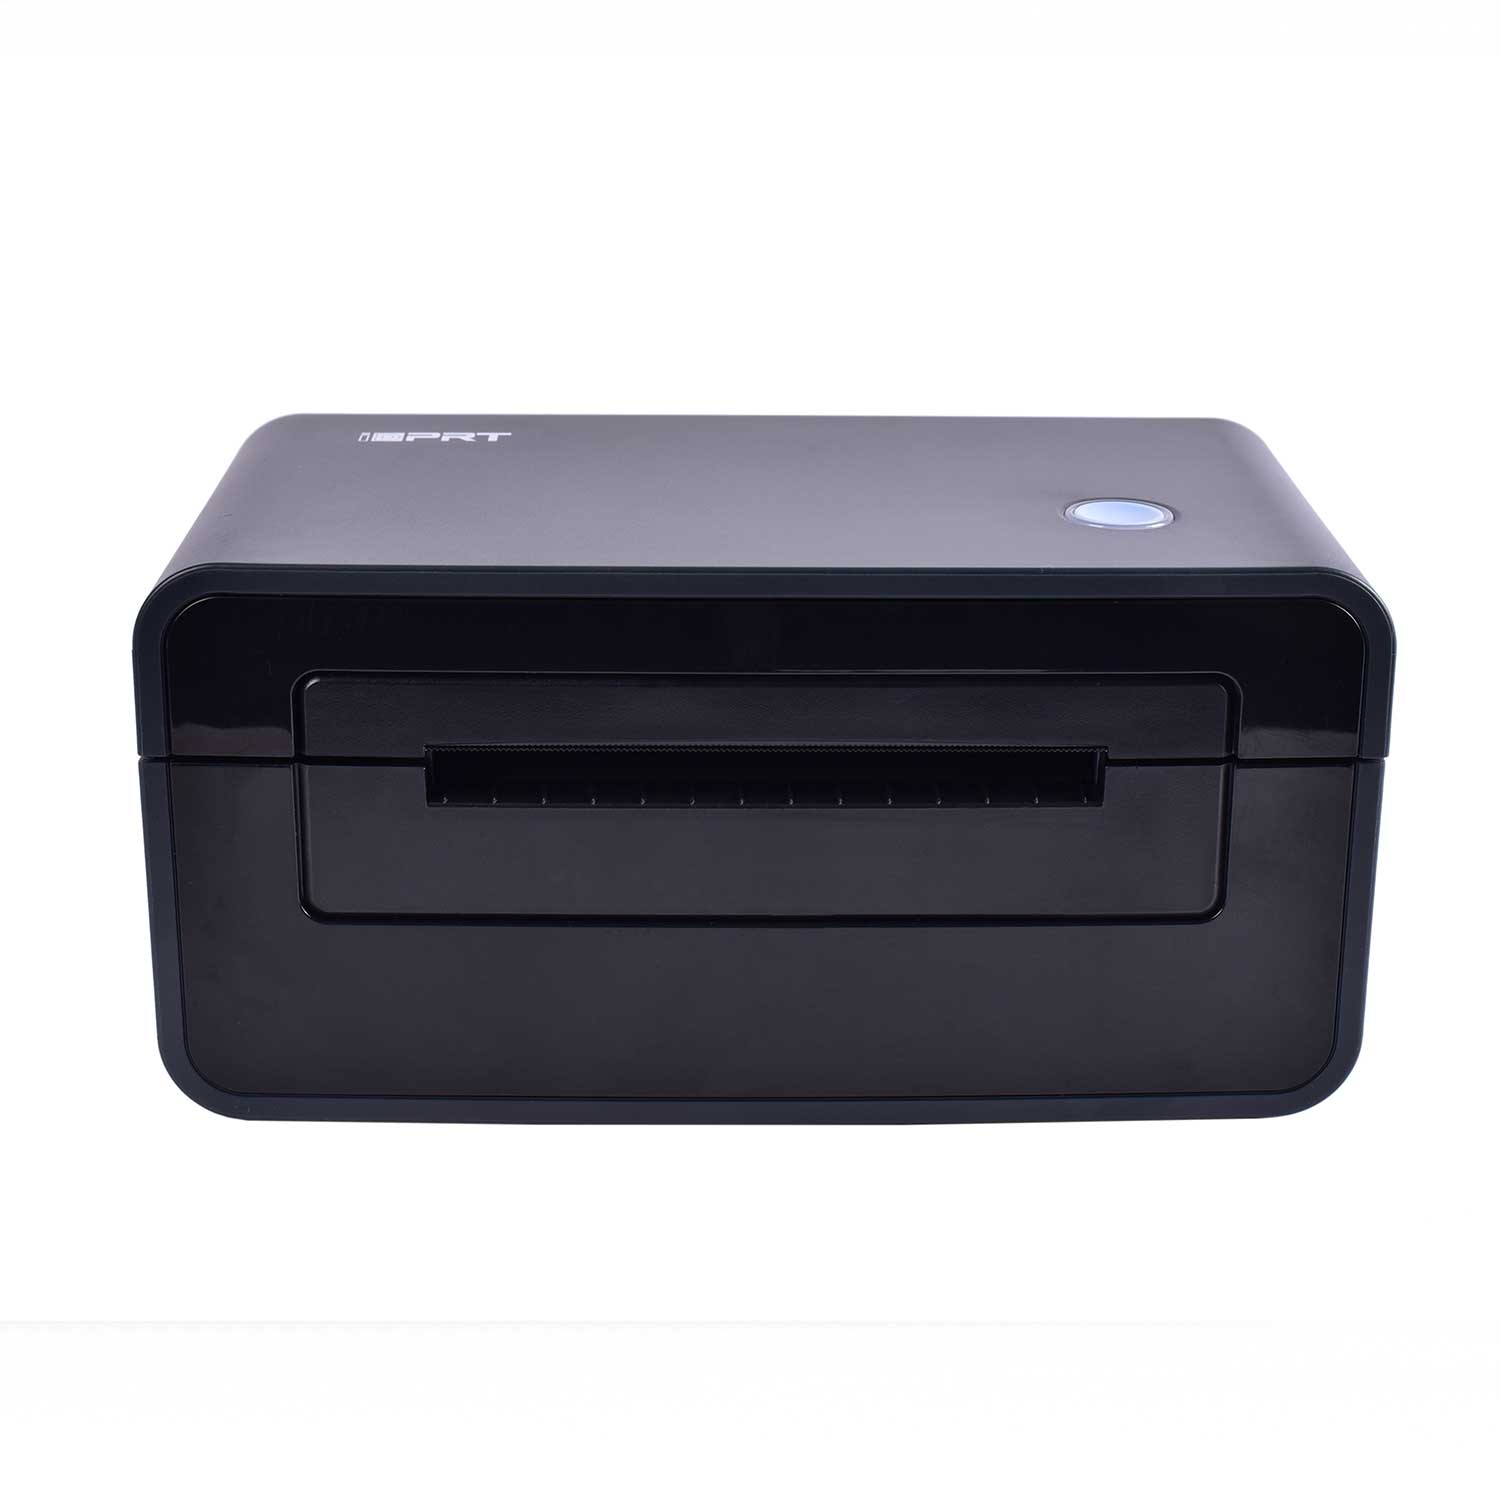 iDPRT SP410 shipping label printer